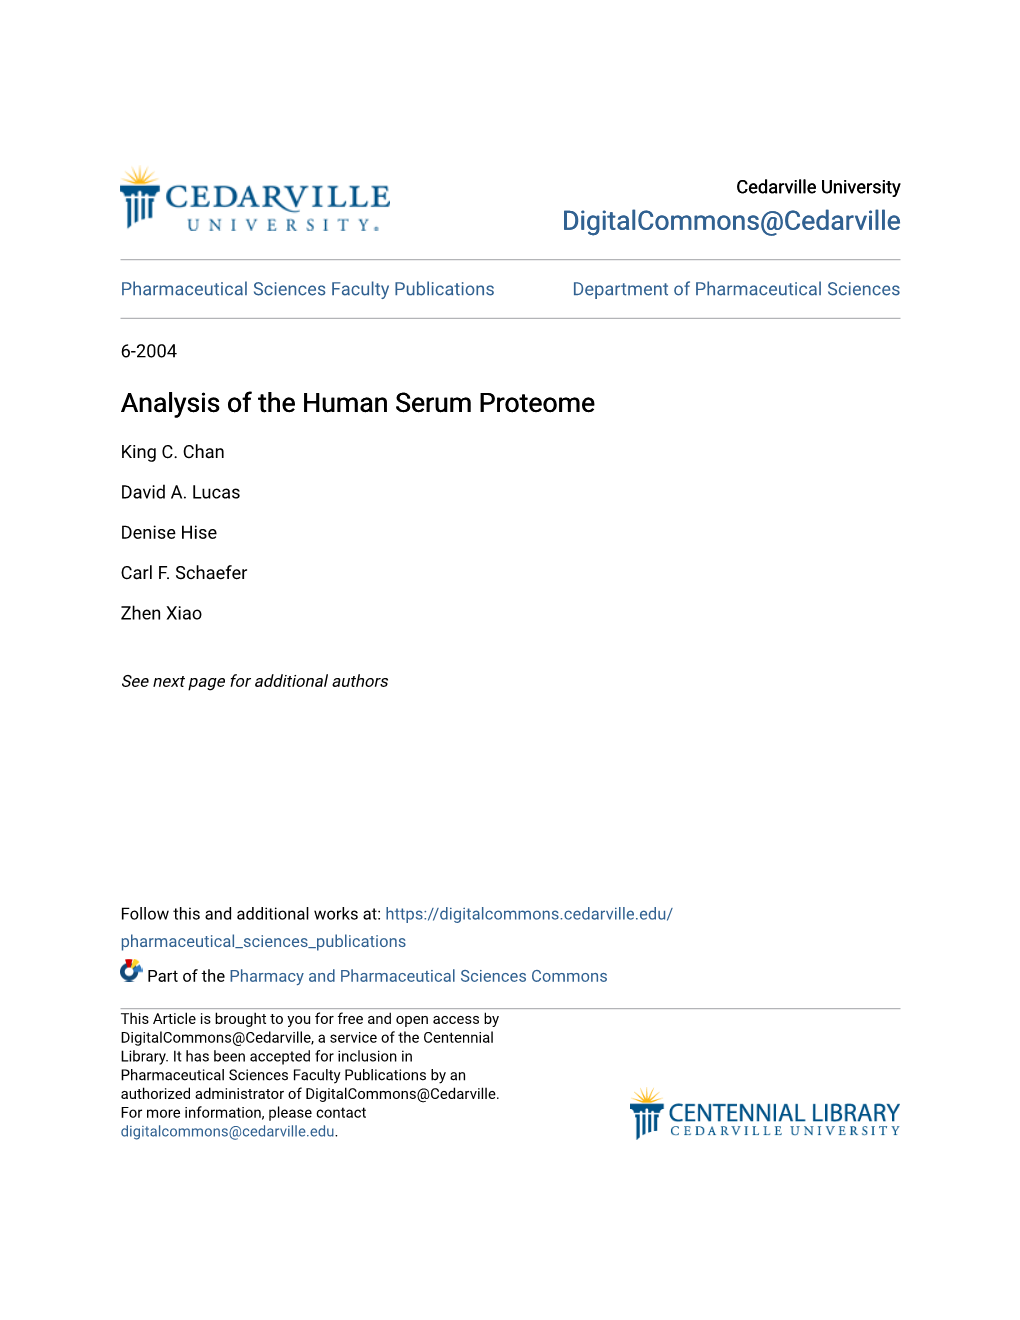 Analysis of the Human Serum Proteome